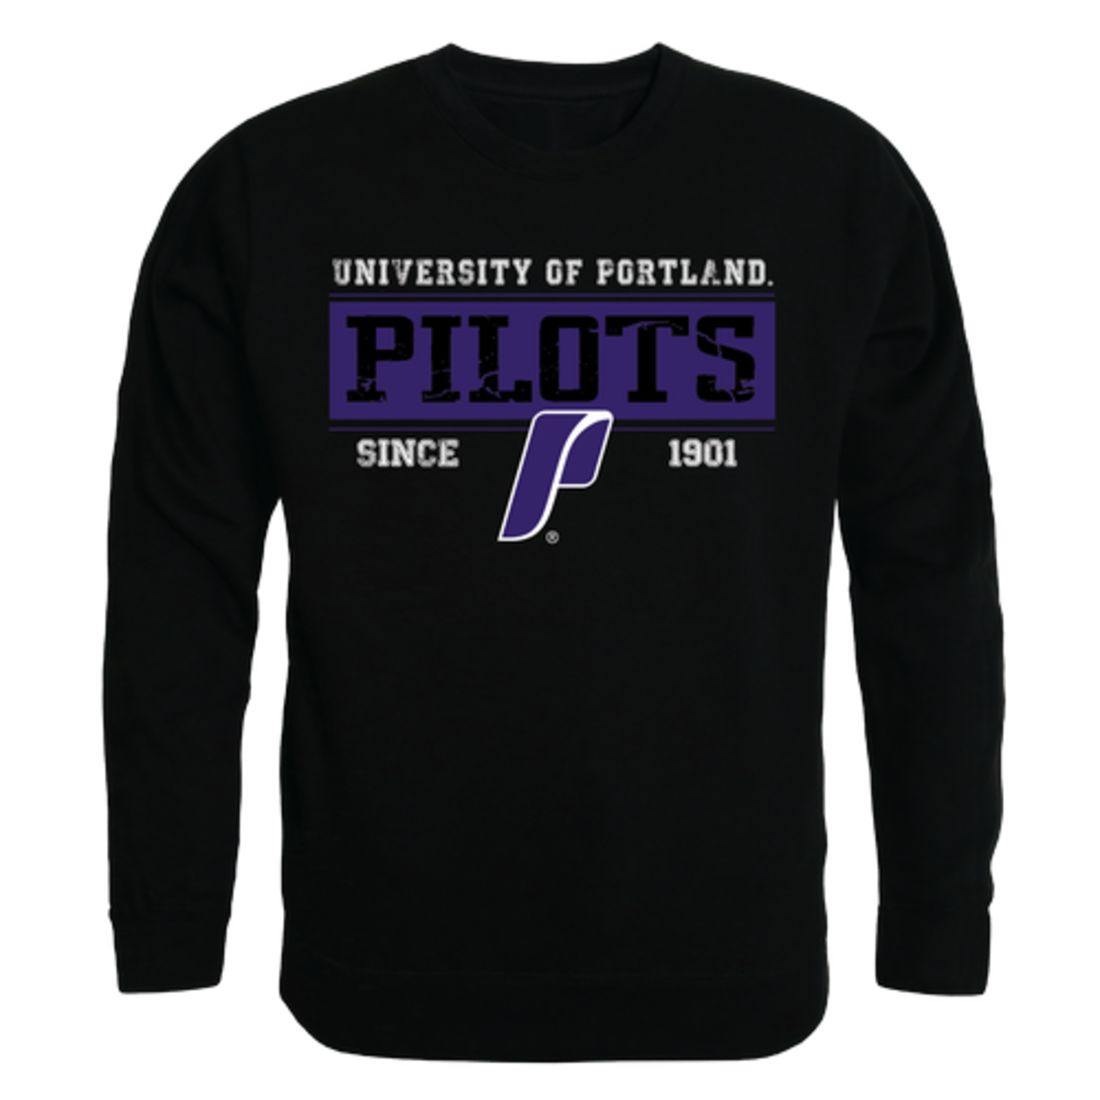 UP University of Portland Pilots Established Crewneck Pullover Sweatshirt Sweater Black-Campus-Wardrobe